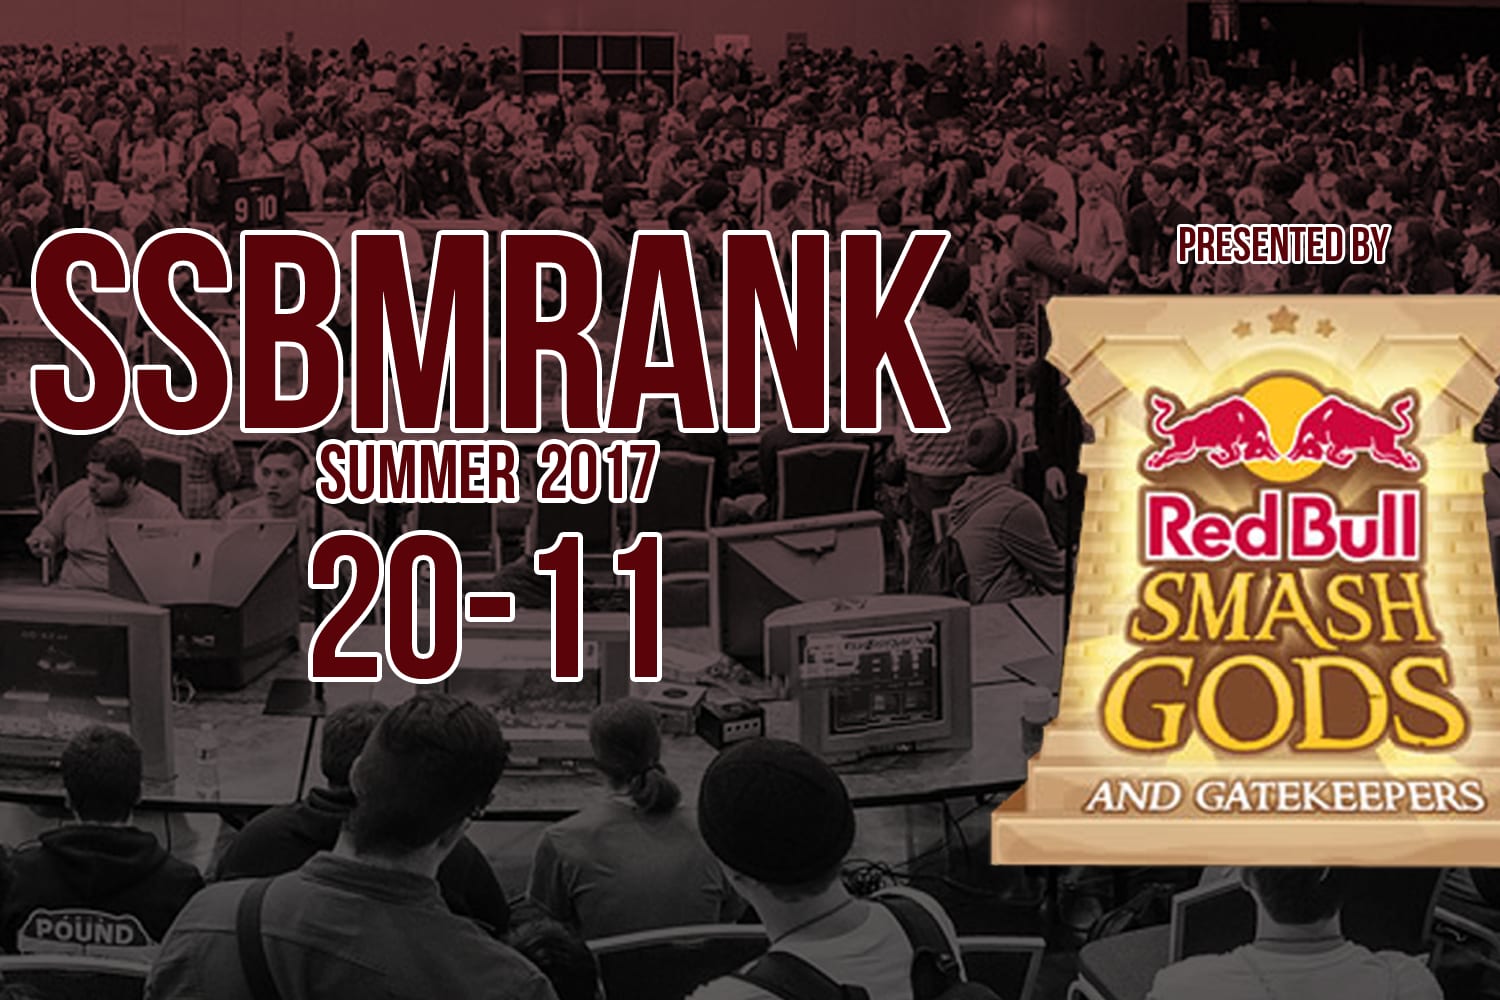 SSBMRank Summer 2017 2011